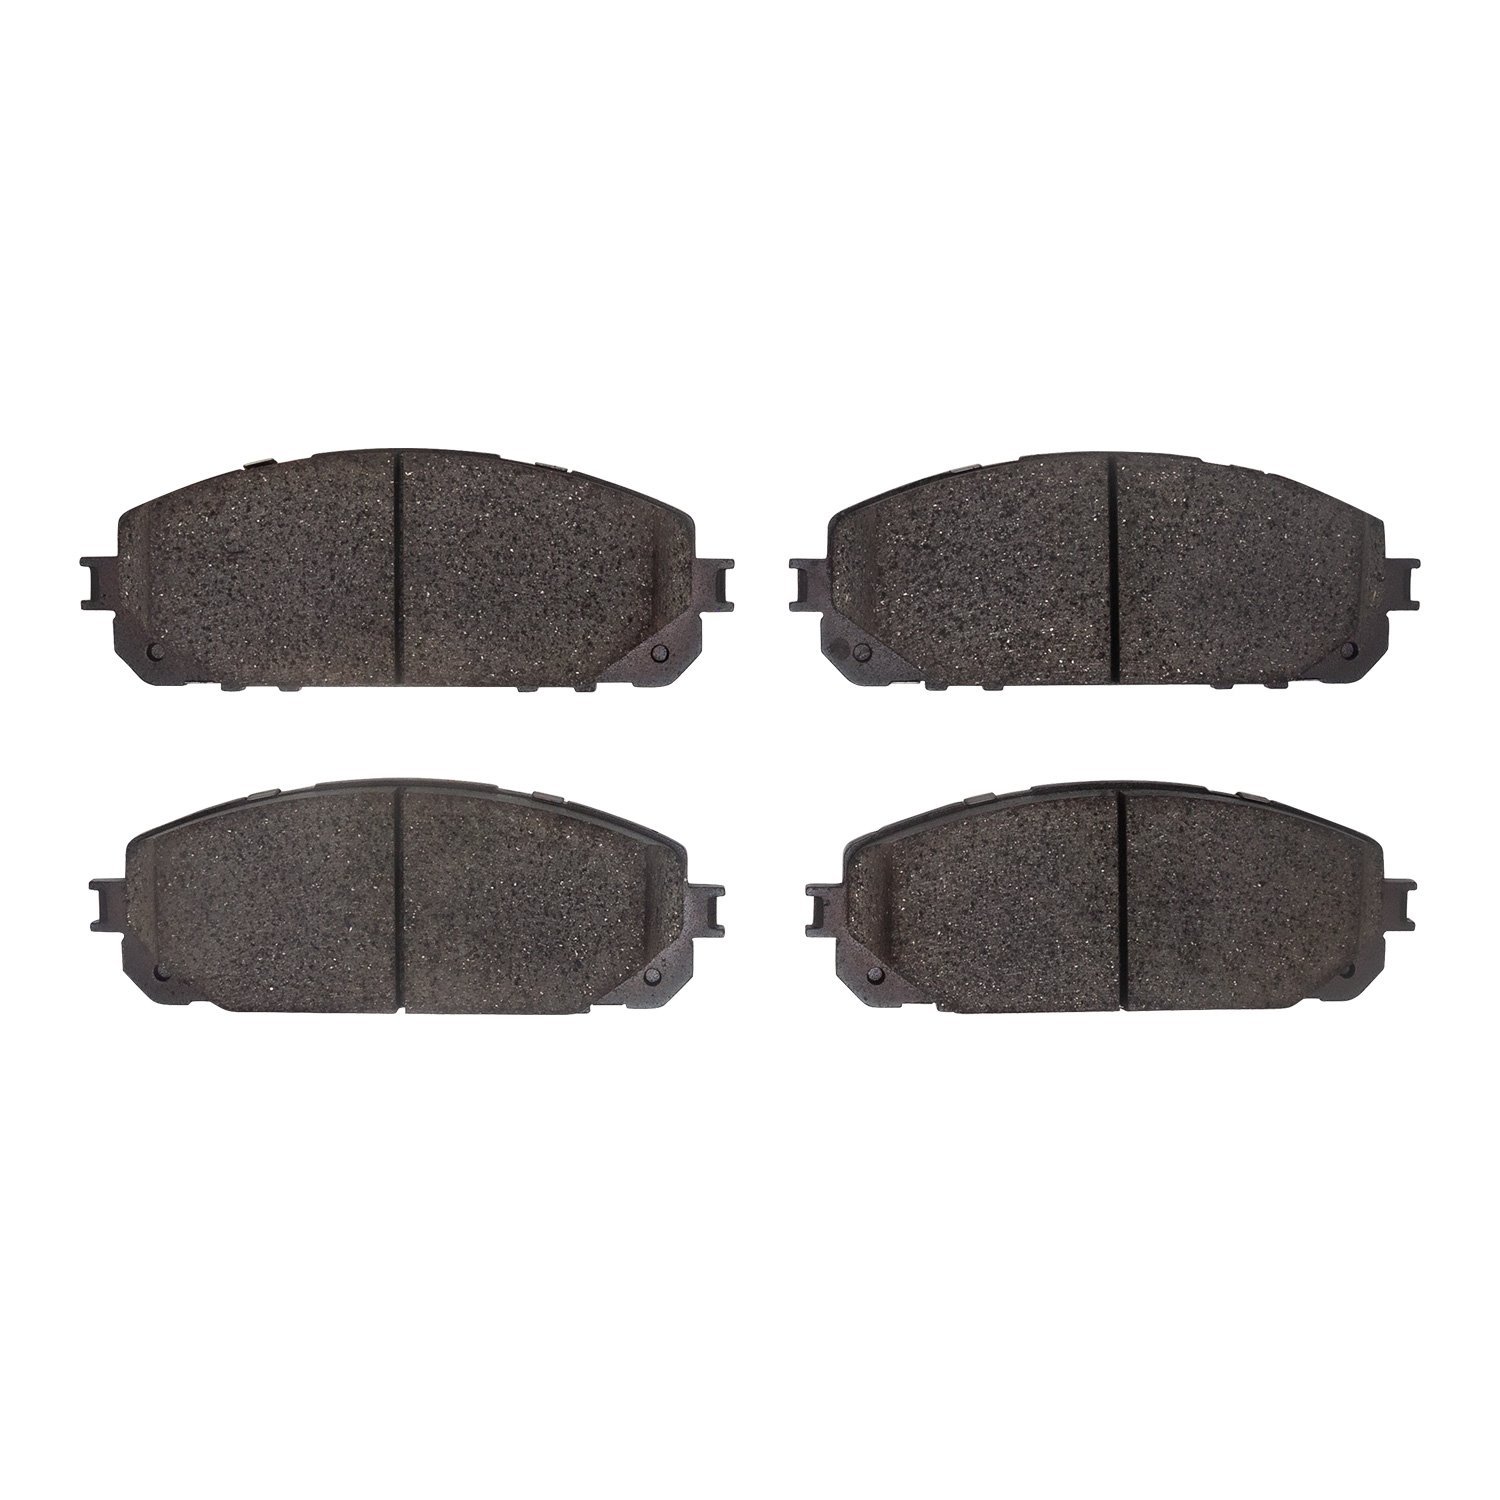 1310-1843-00 3000-Series Ceramic Brake Pads, Fits Select Mopar, Position: Front